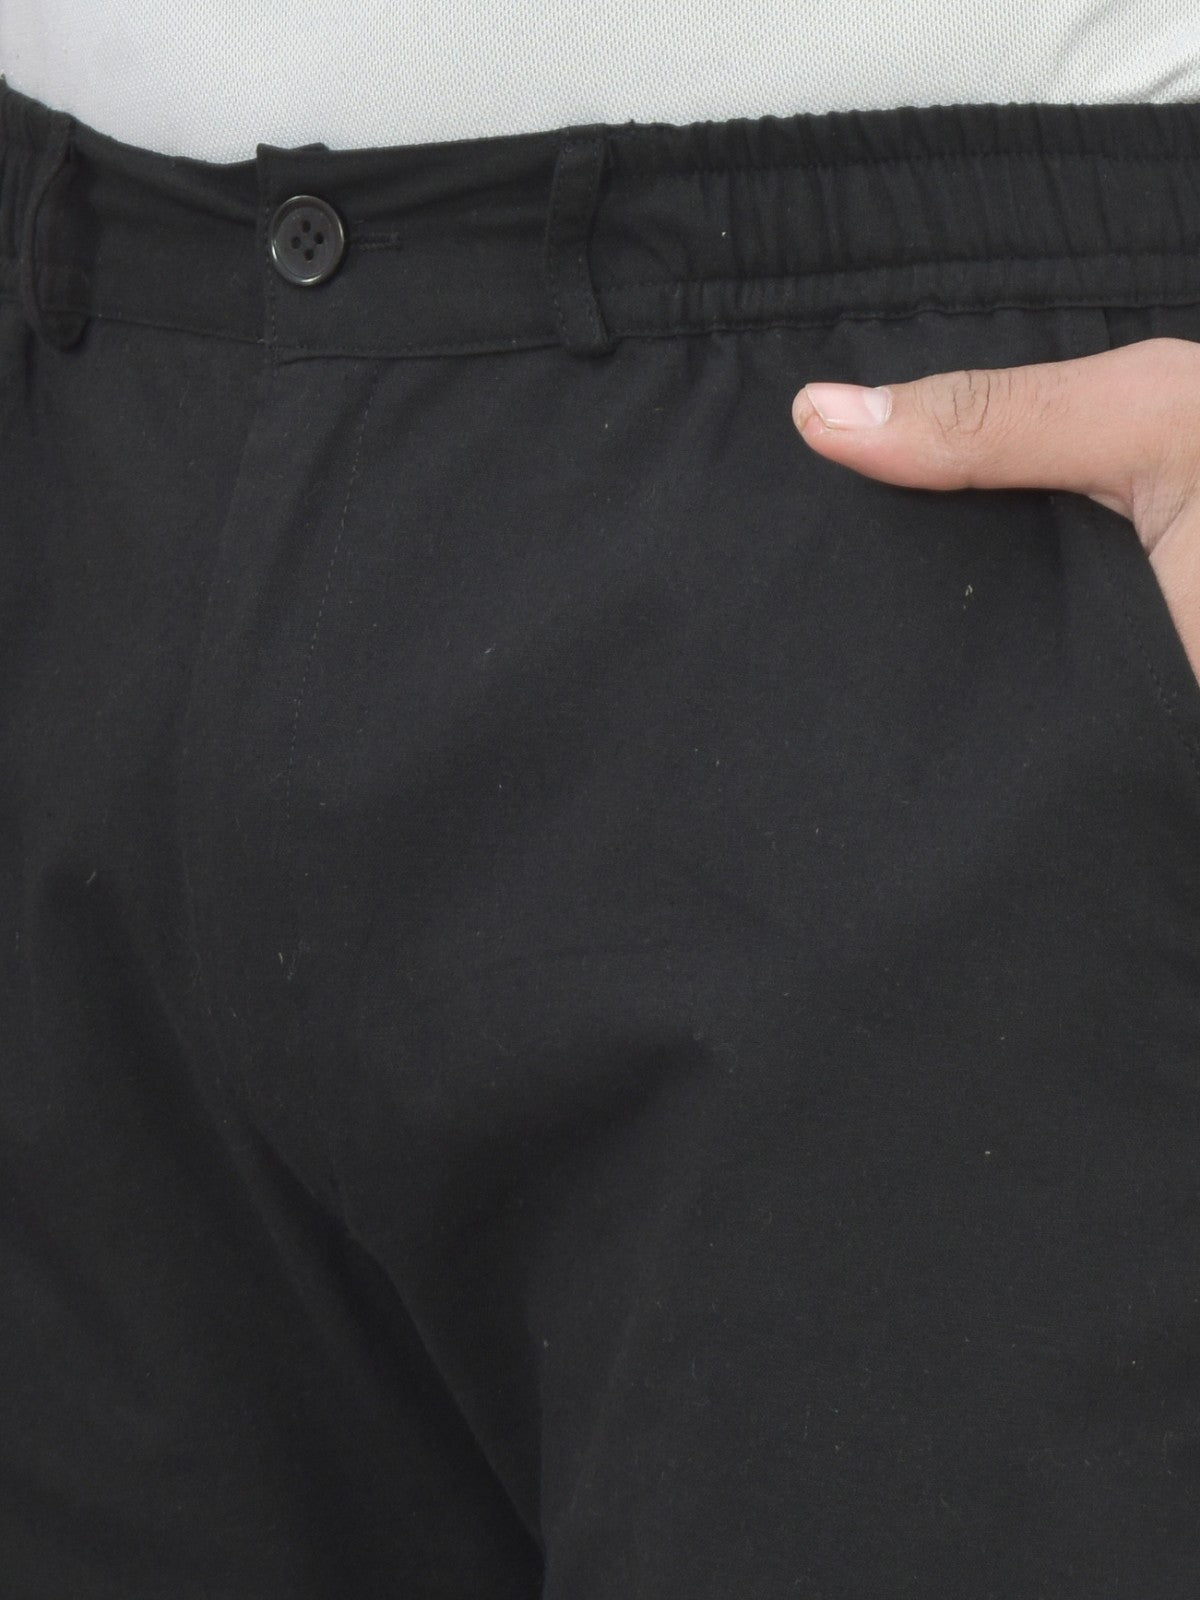 Black Airy linen  Summer Cool Cotton Comfort Pants For Men